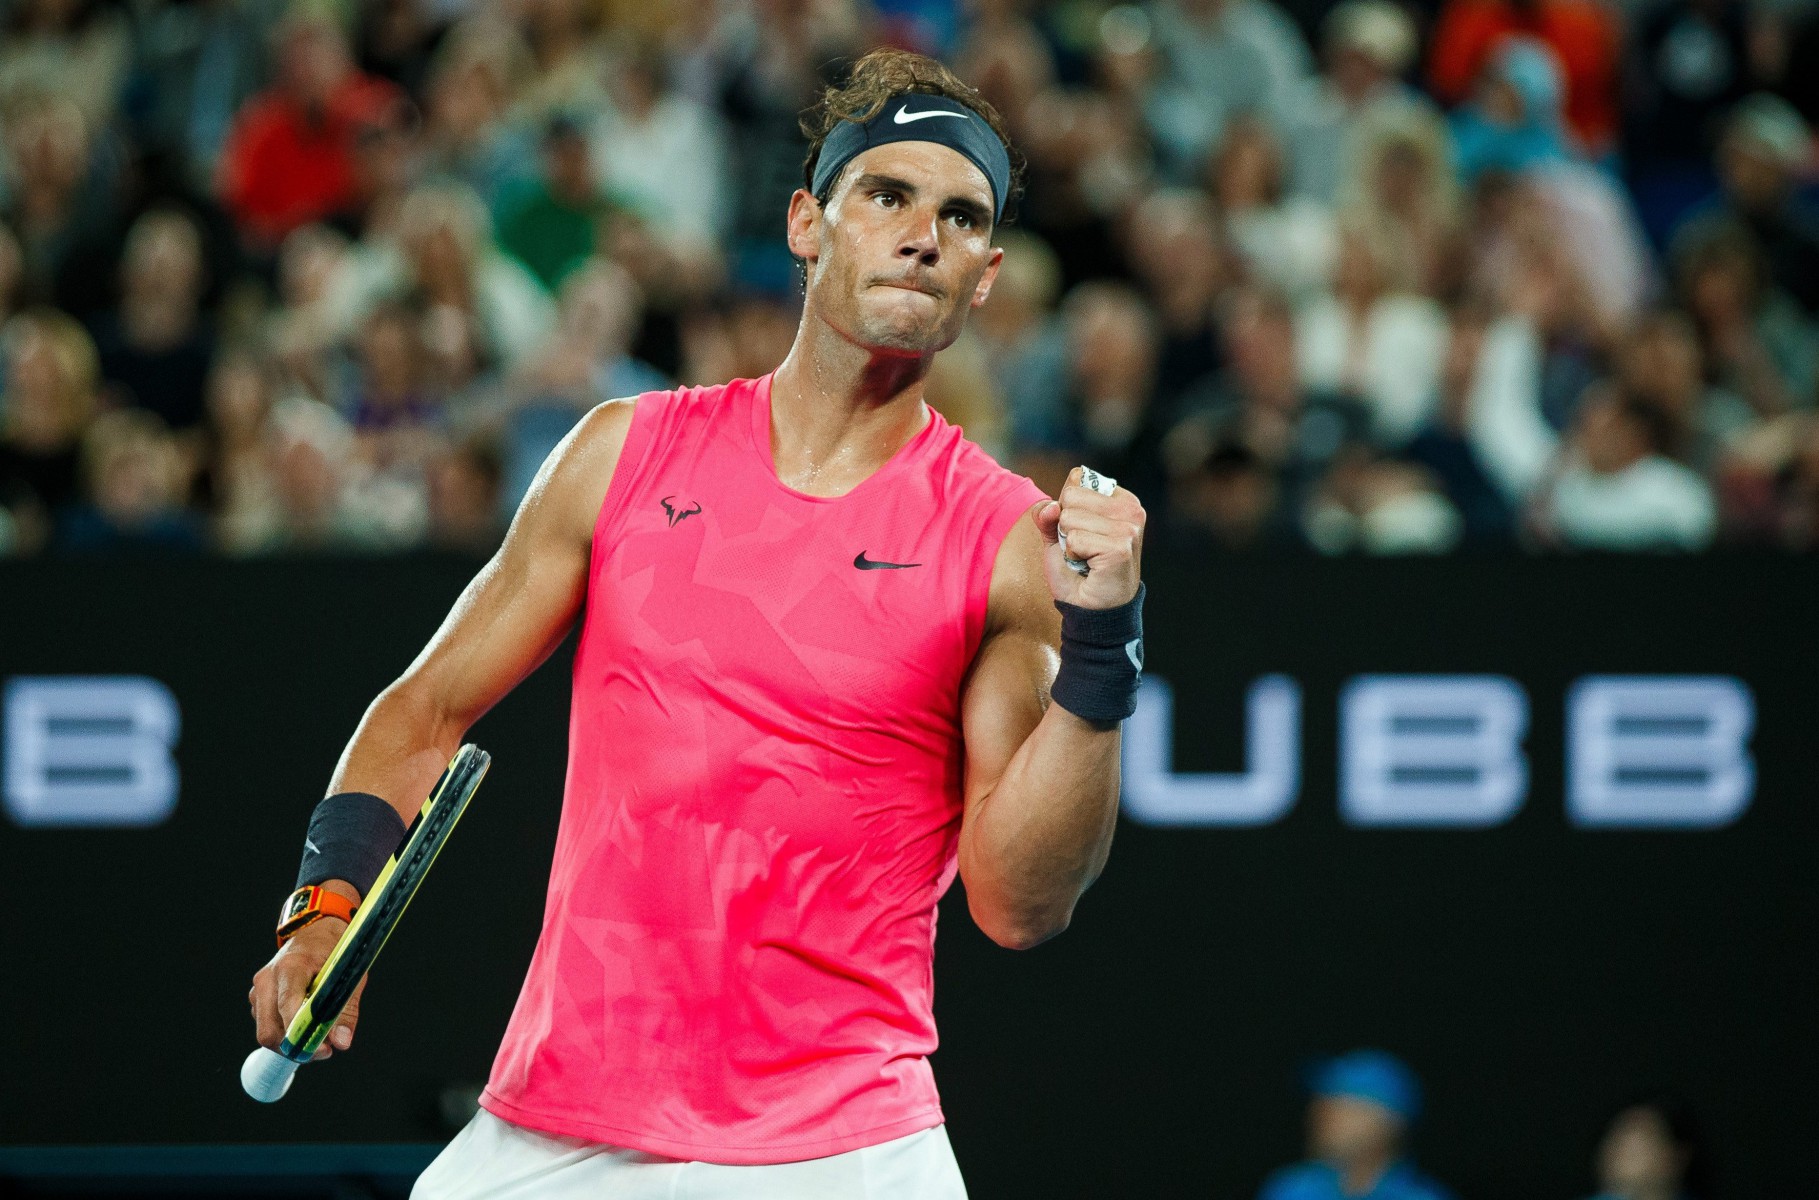 , Nadal vs Thiem LIVE: Stream free, TV channel and start time for Australian Open quarter-final match